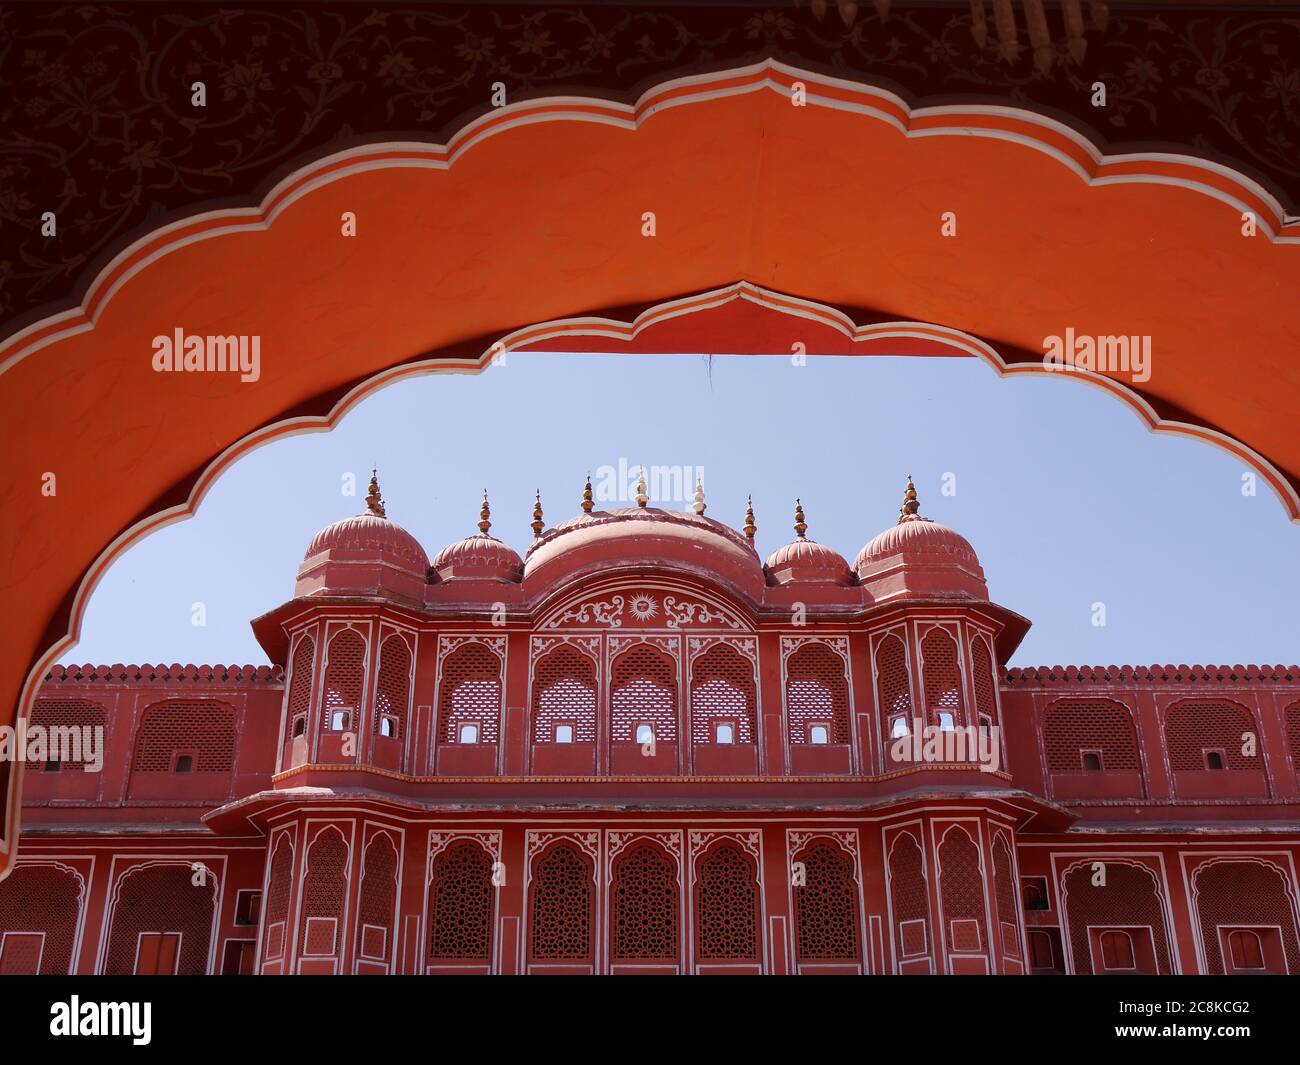 Ornate facade of Amber Fort under orange arch Jaipur, Rajasthan, India Stock Photo